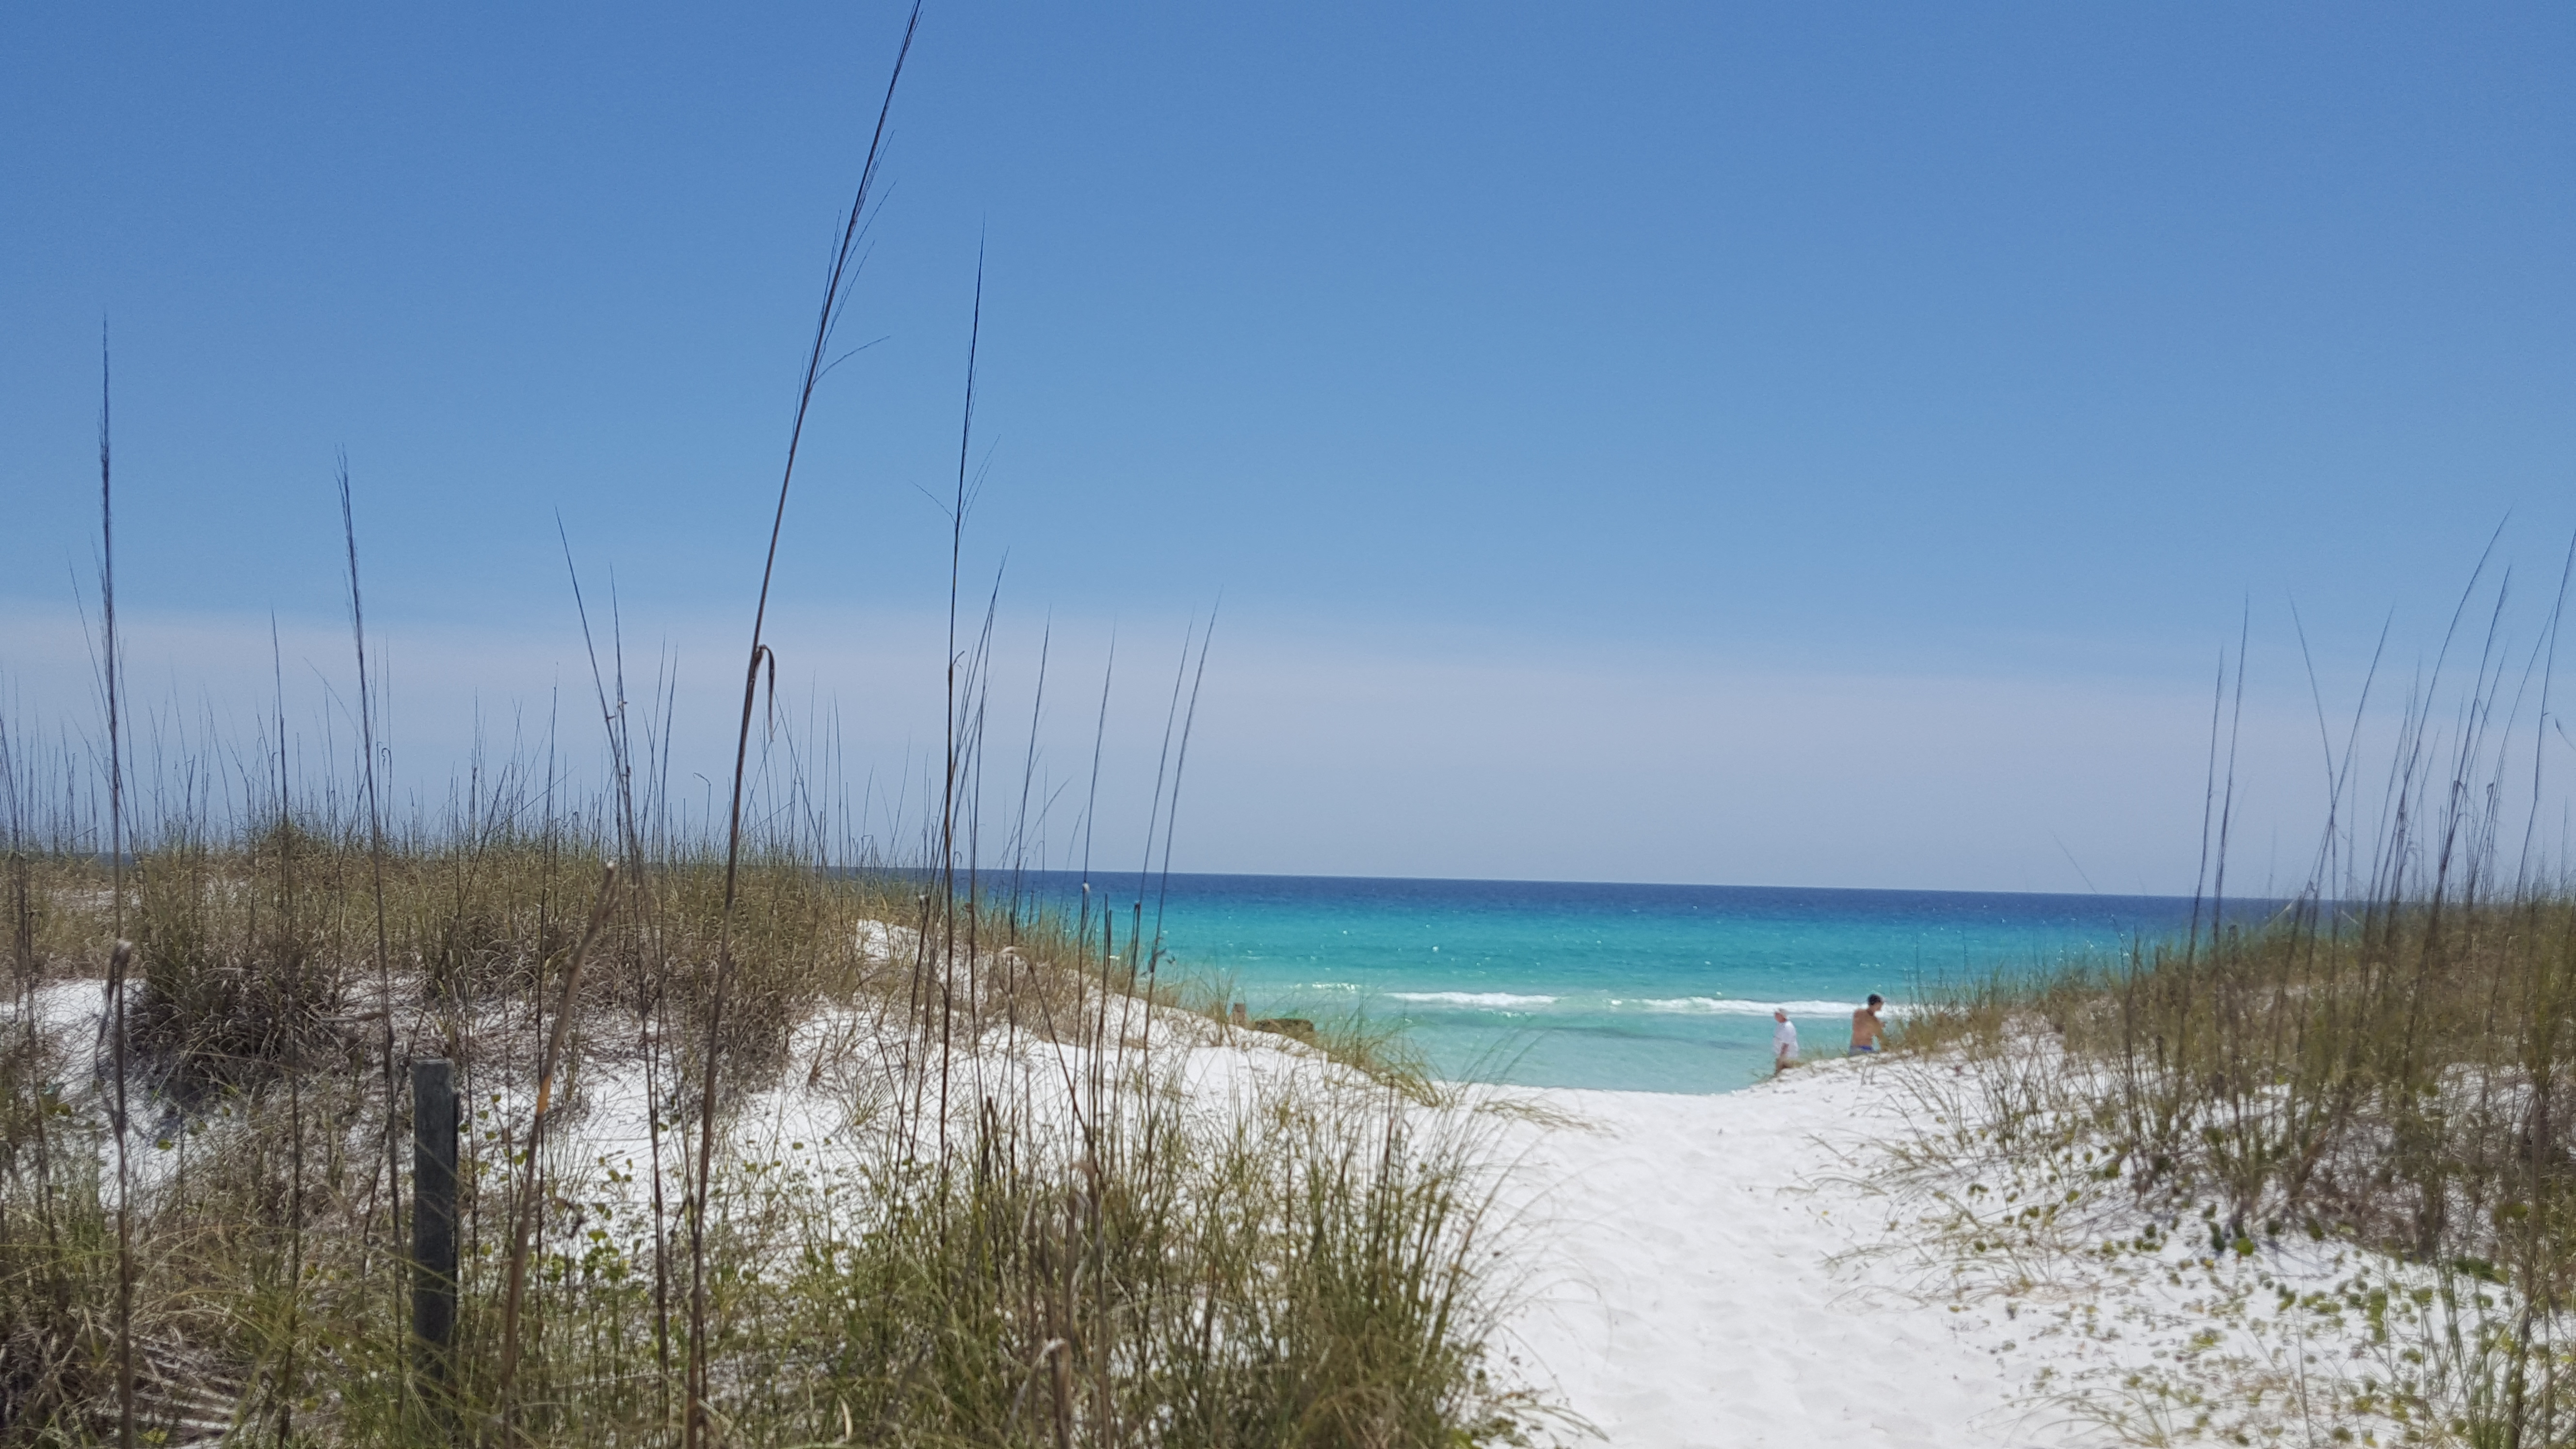 Path to Destin, Florida beaches where families can enjoy a safe family vacation this spring.